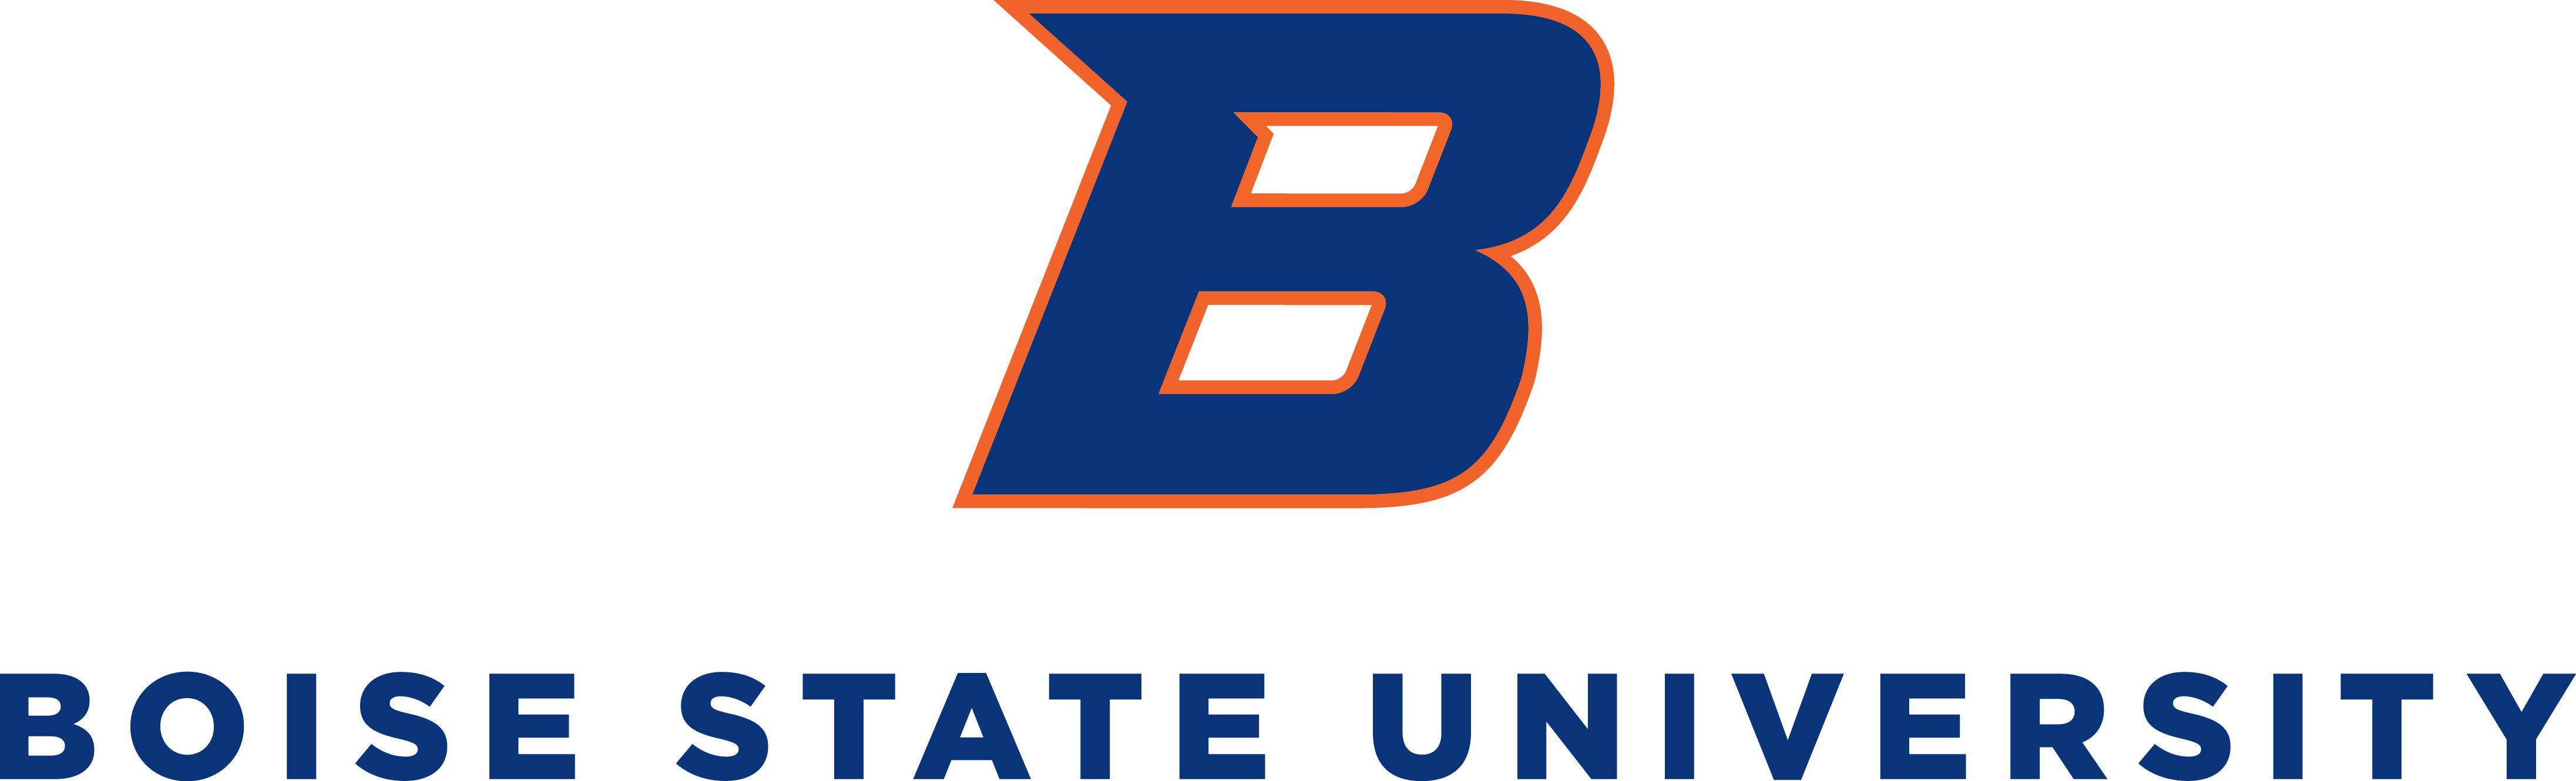 Blue B Logo - Logo Download Library - Brand Standards